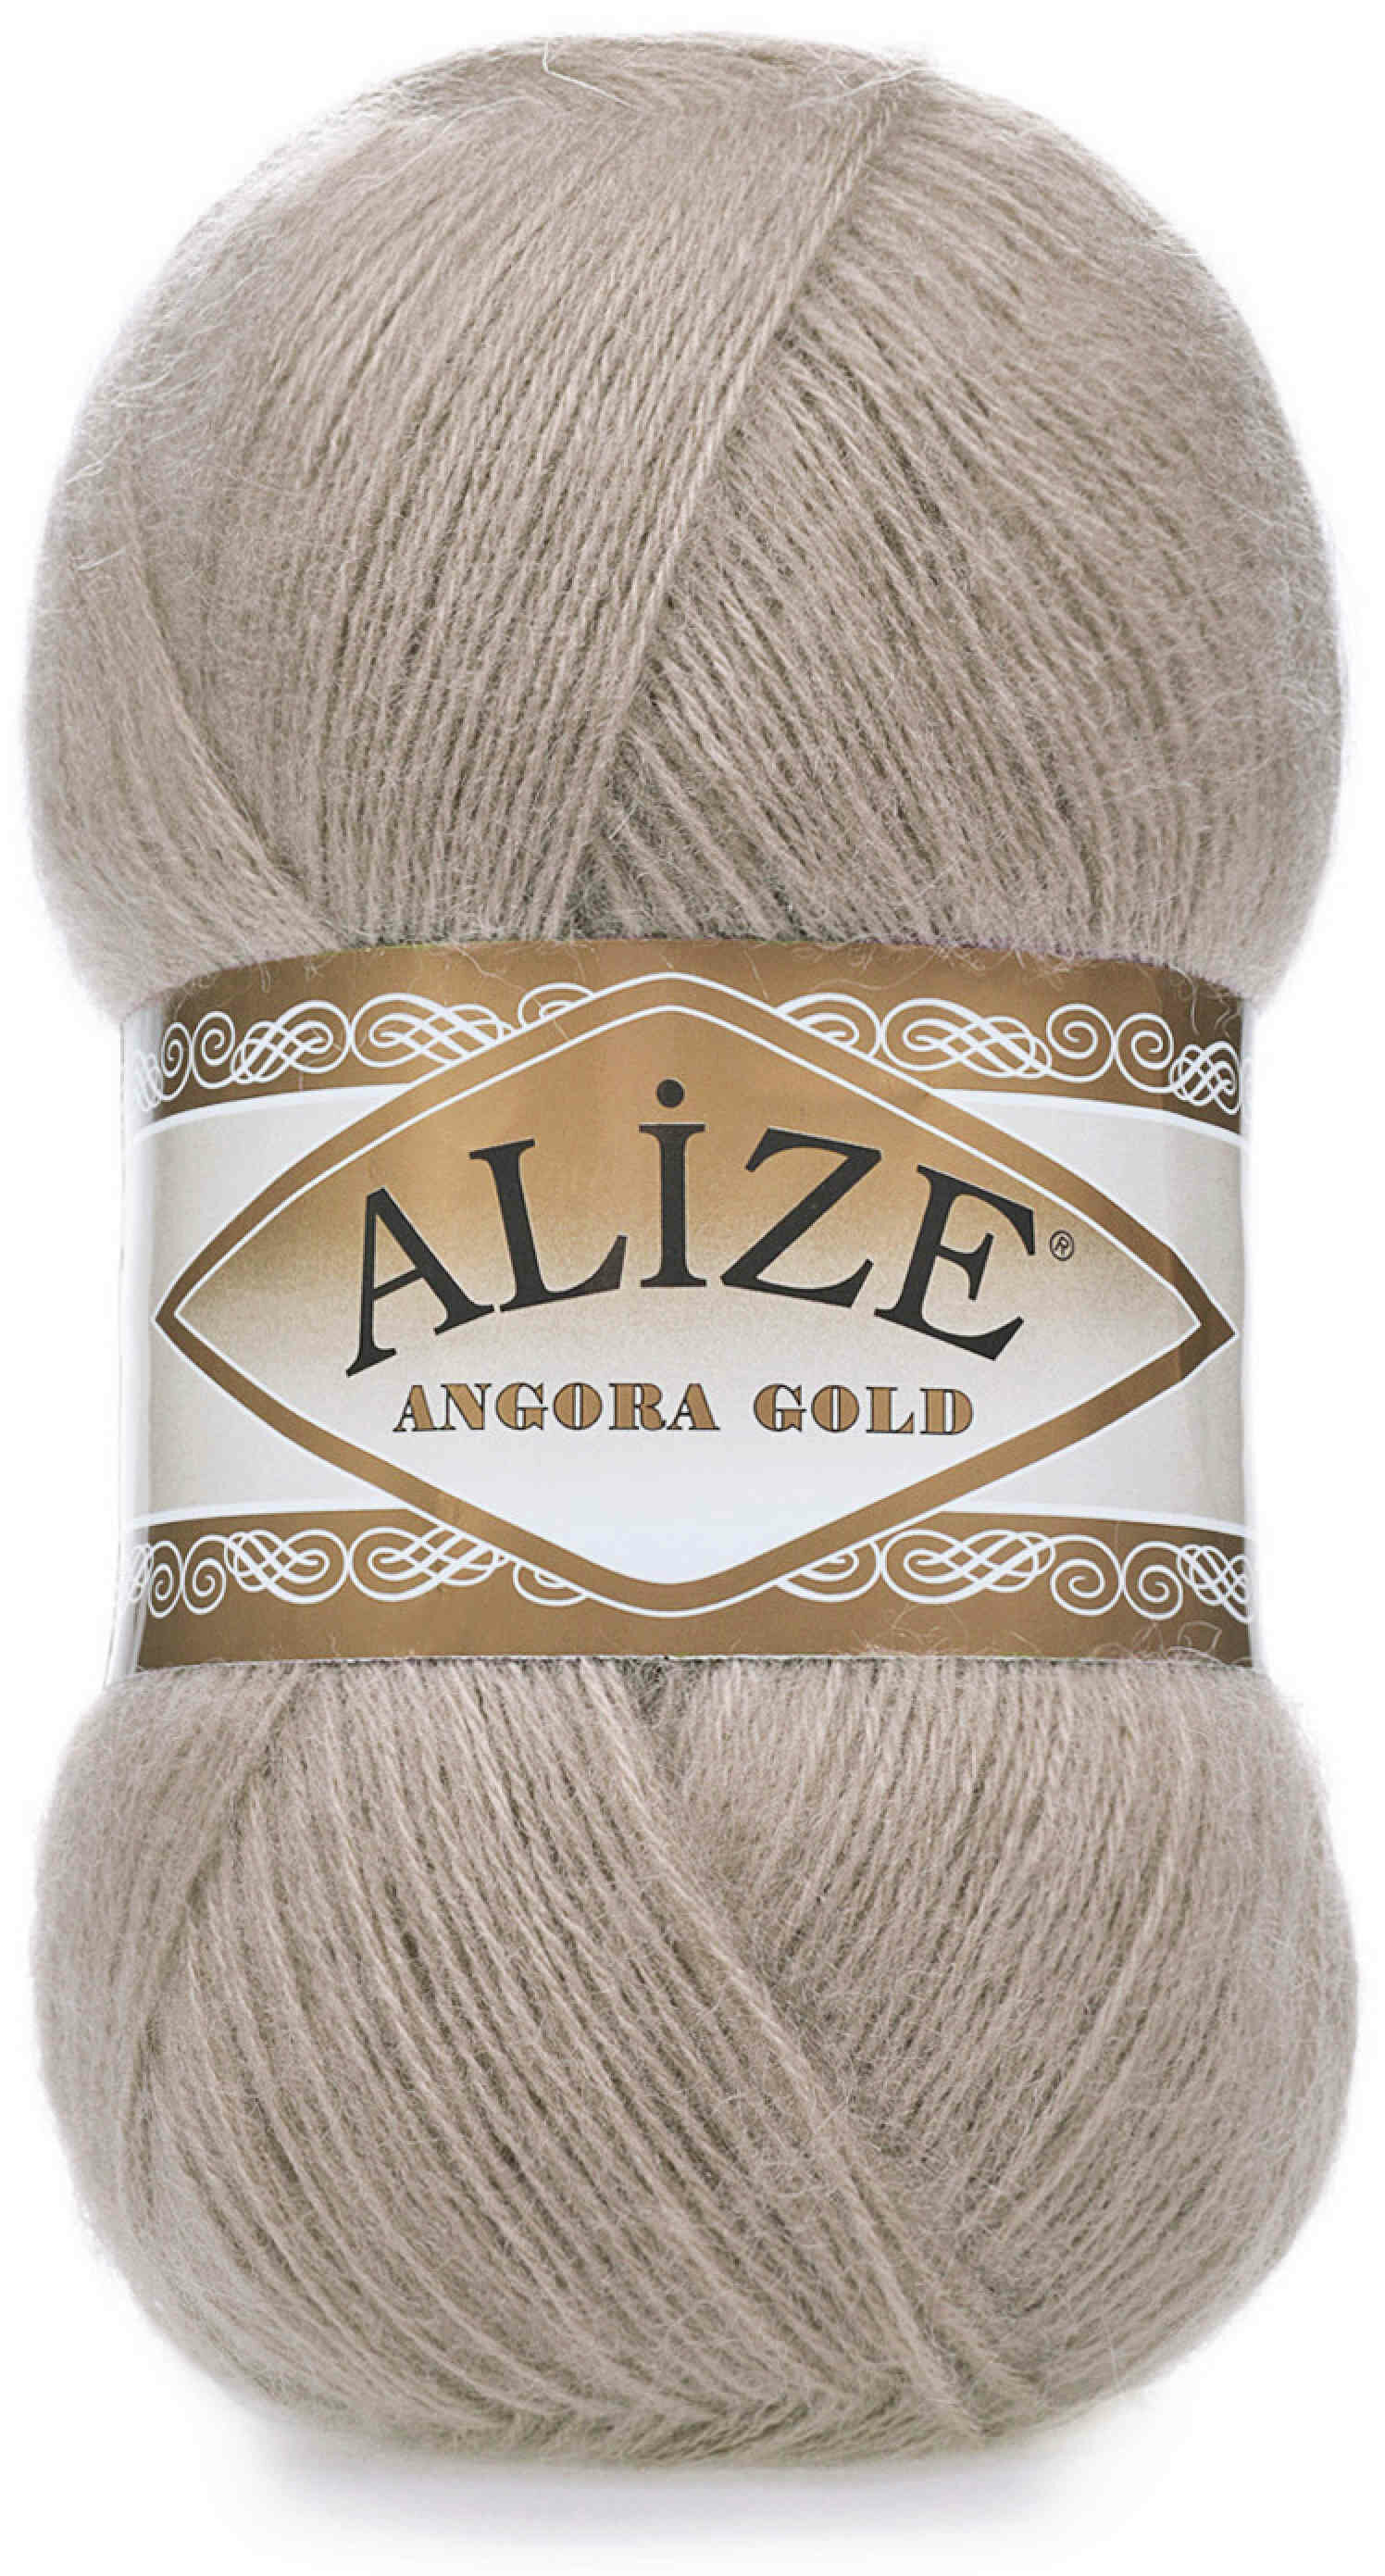  Alize Angora Gold ( ) - 2  541  20% , 80%  550/100